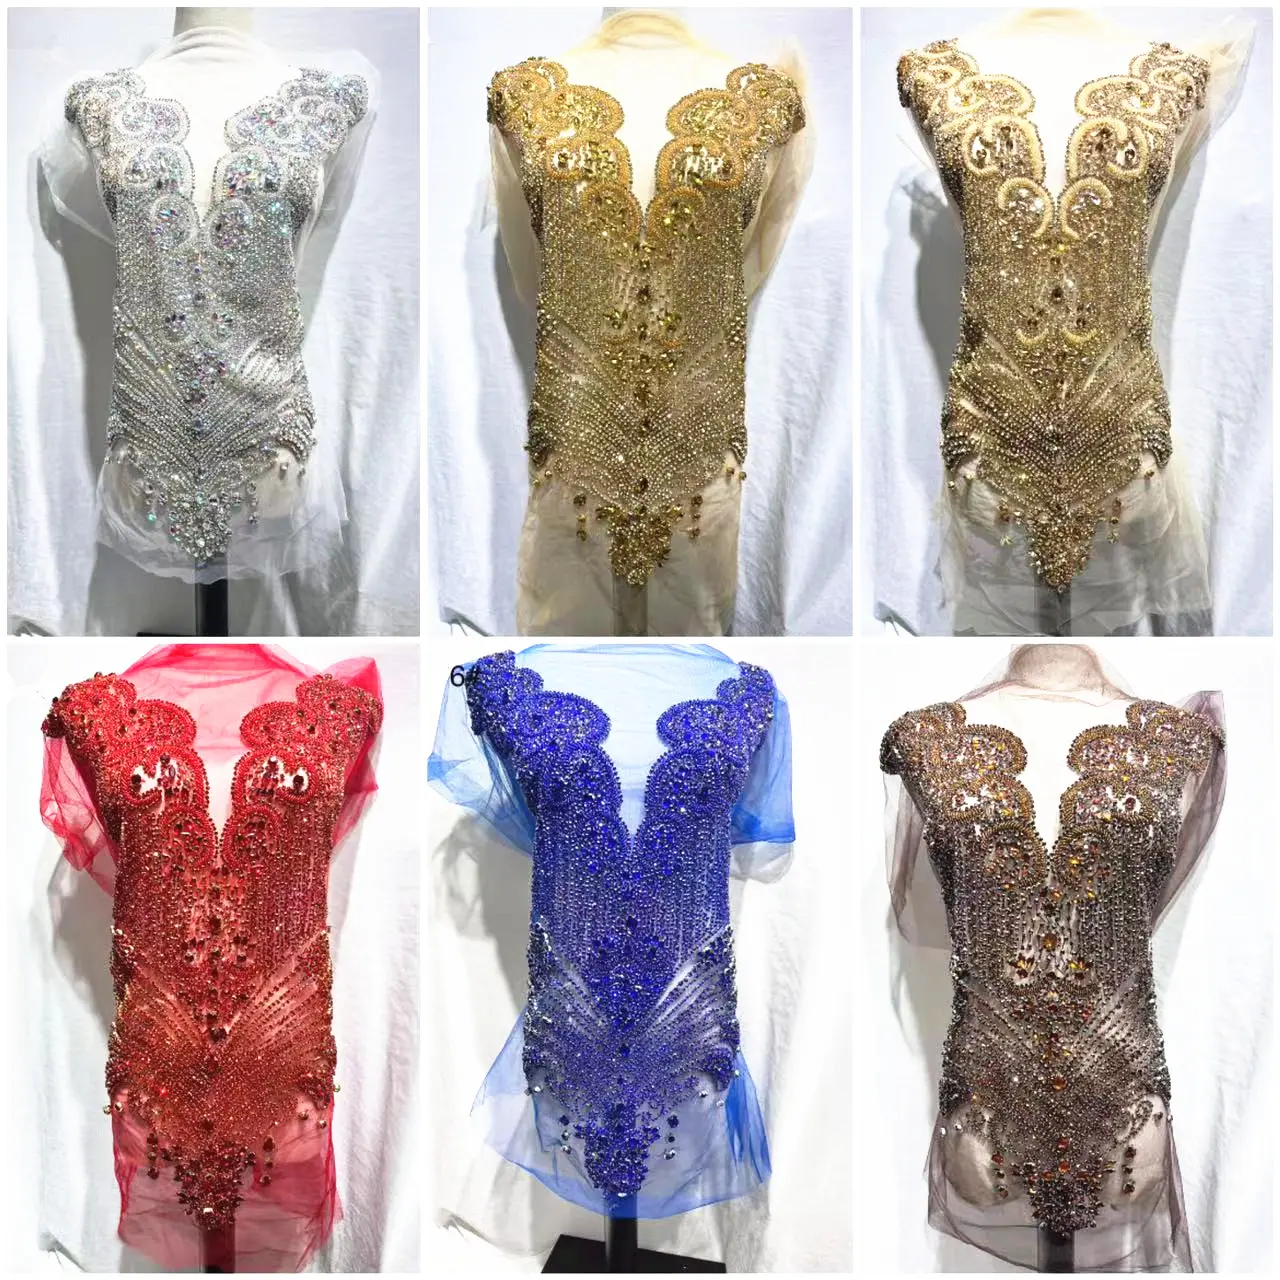 Sparkling Big Bling Pieces Sew on Crystal Rhinestone Full Body Bodice Rhinestone Applique For Prom Party Dress